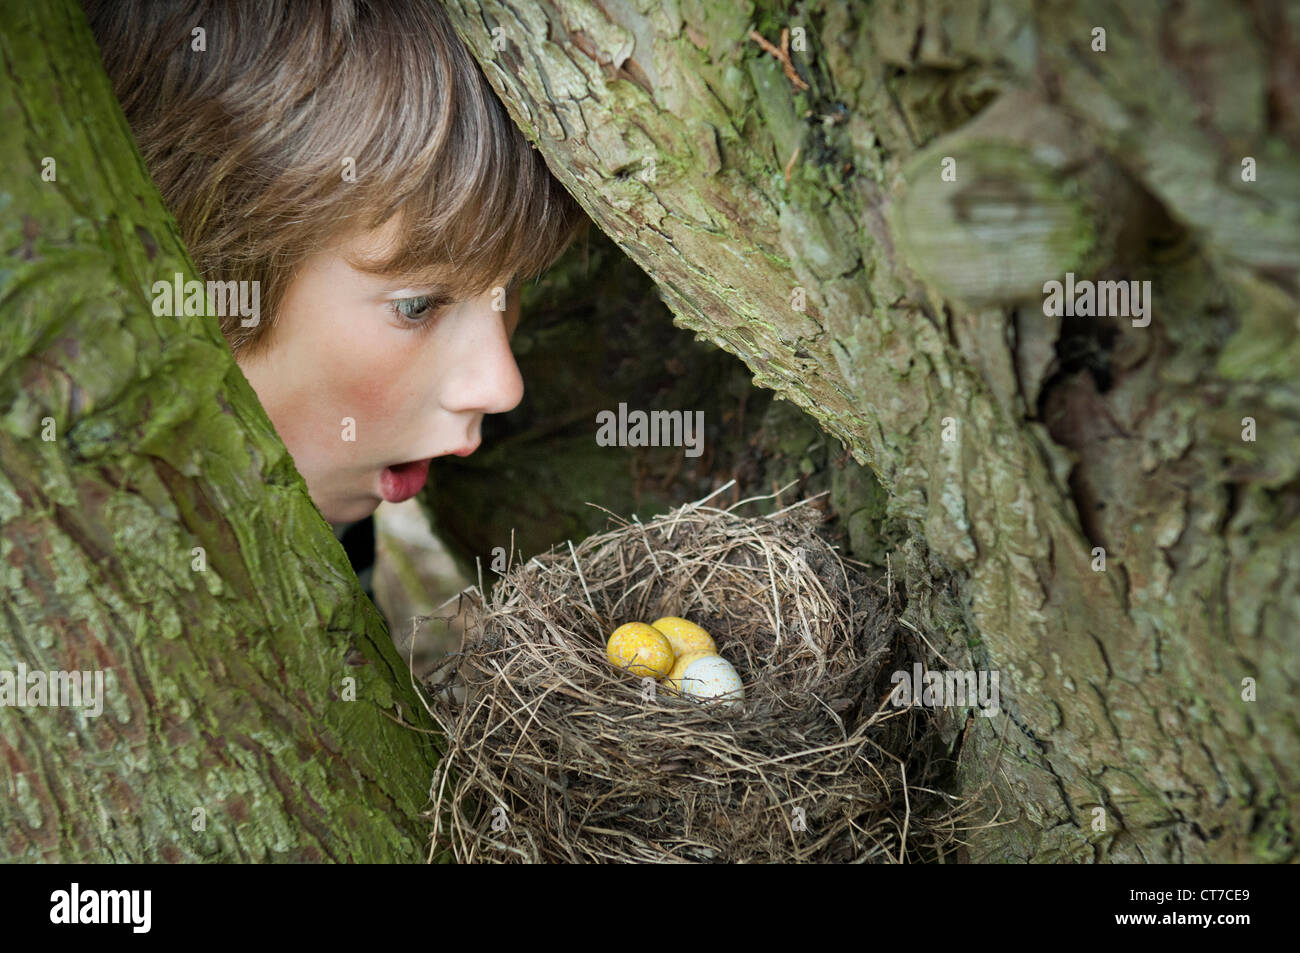 Boy looking at eggs in bird's nest Stock Photo